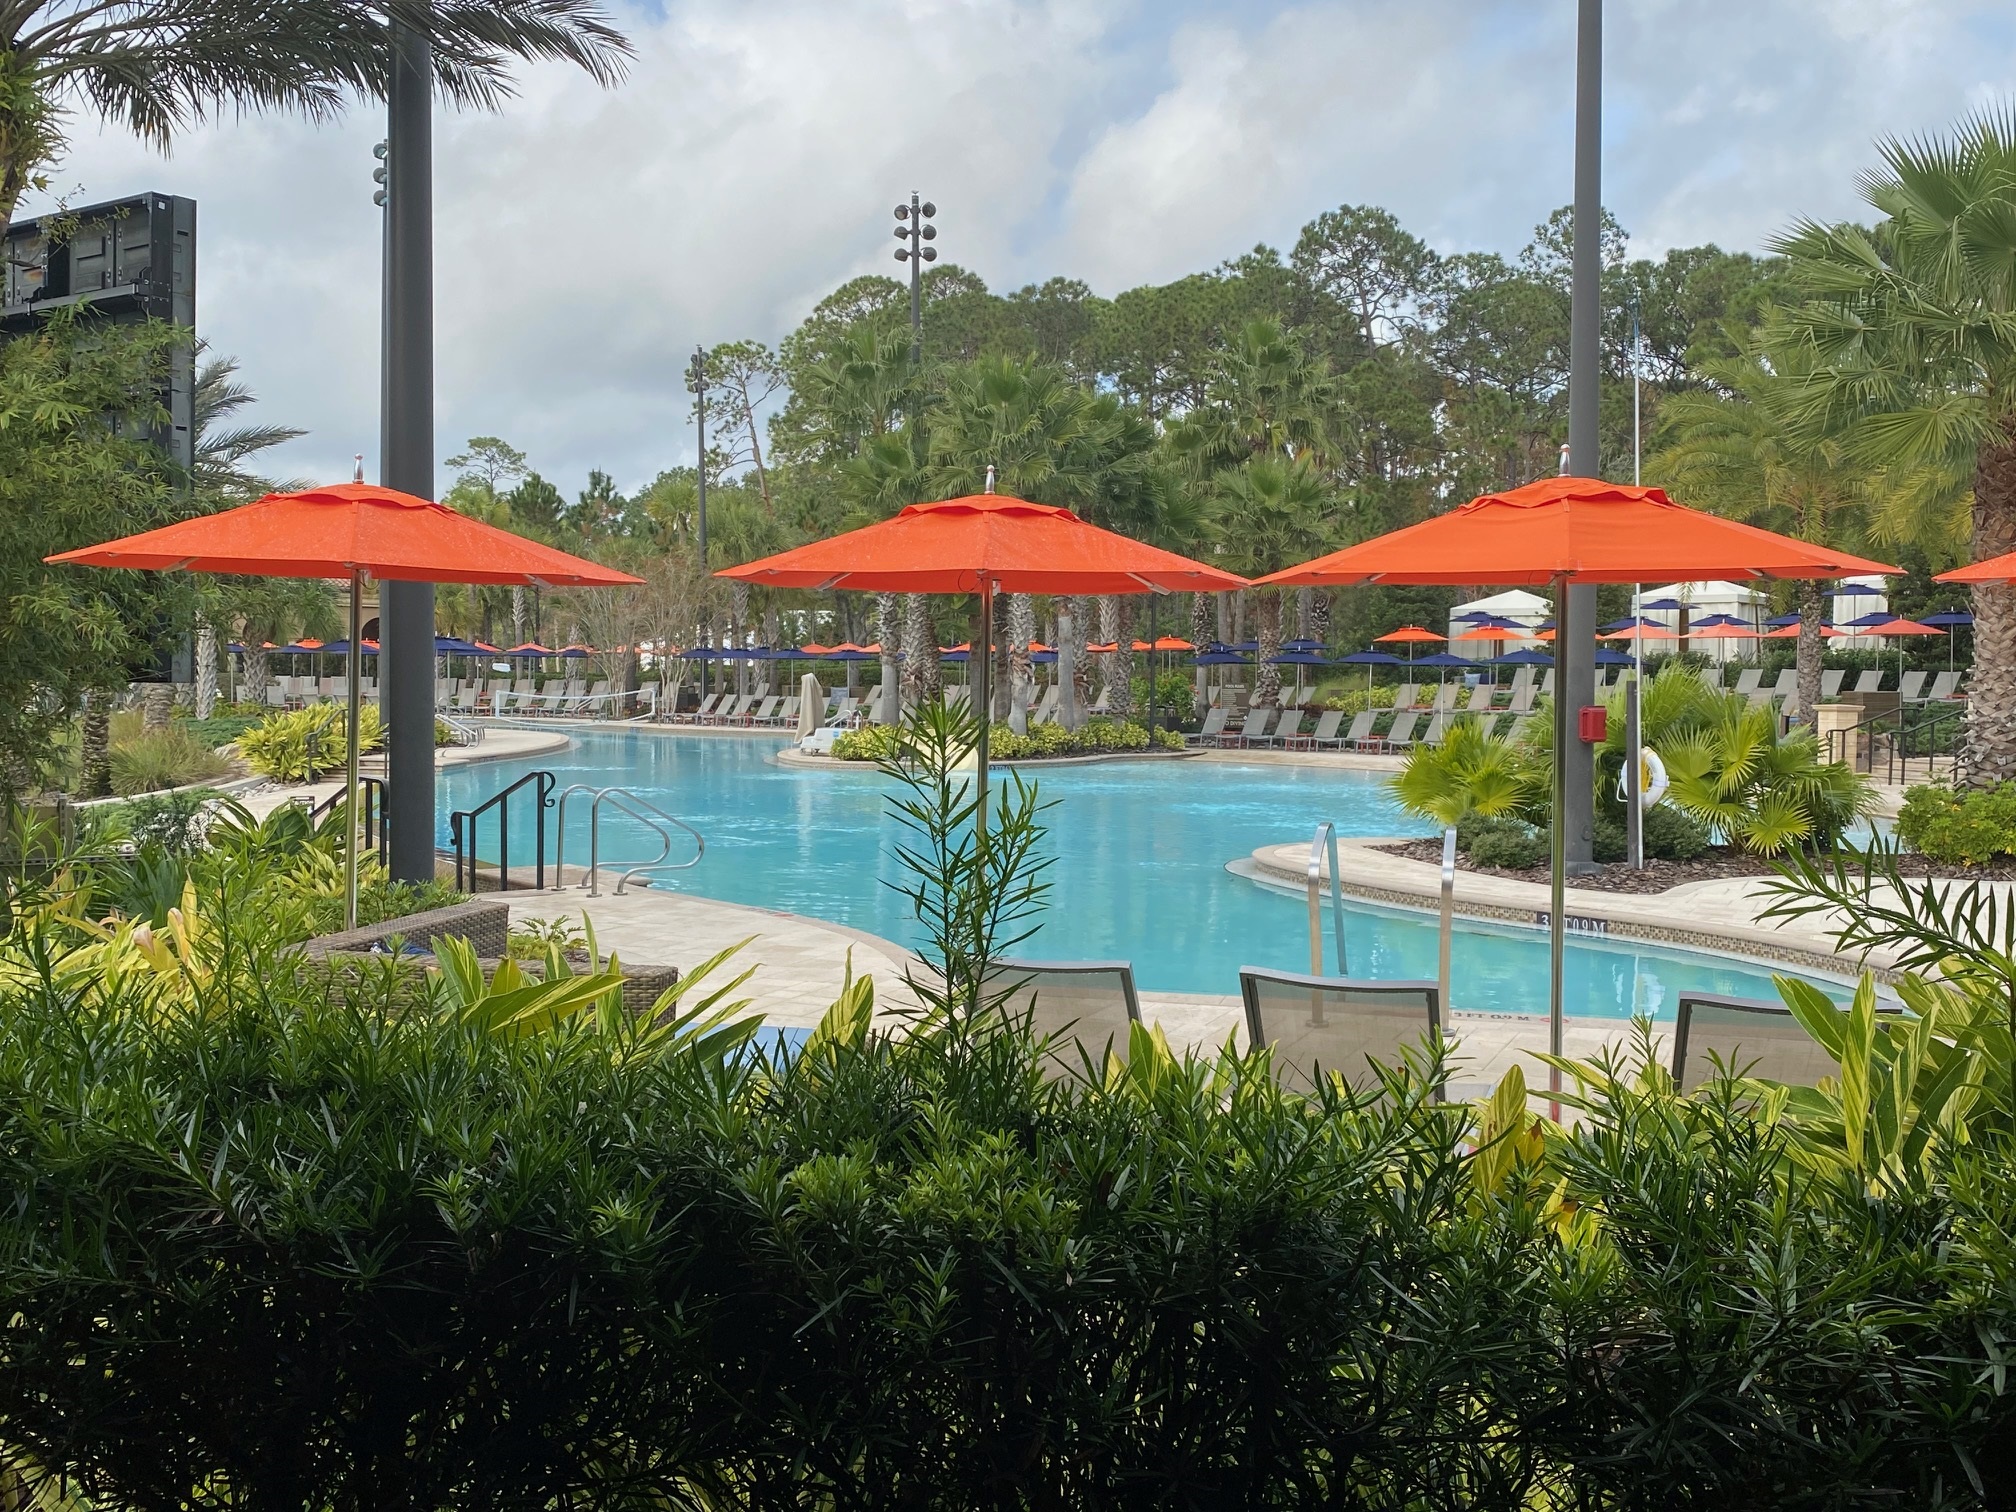 Four Seasons Orlando pool